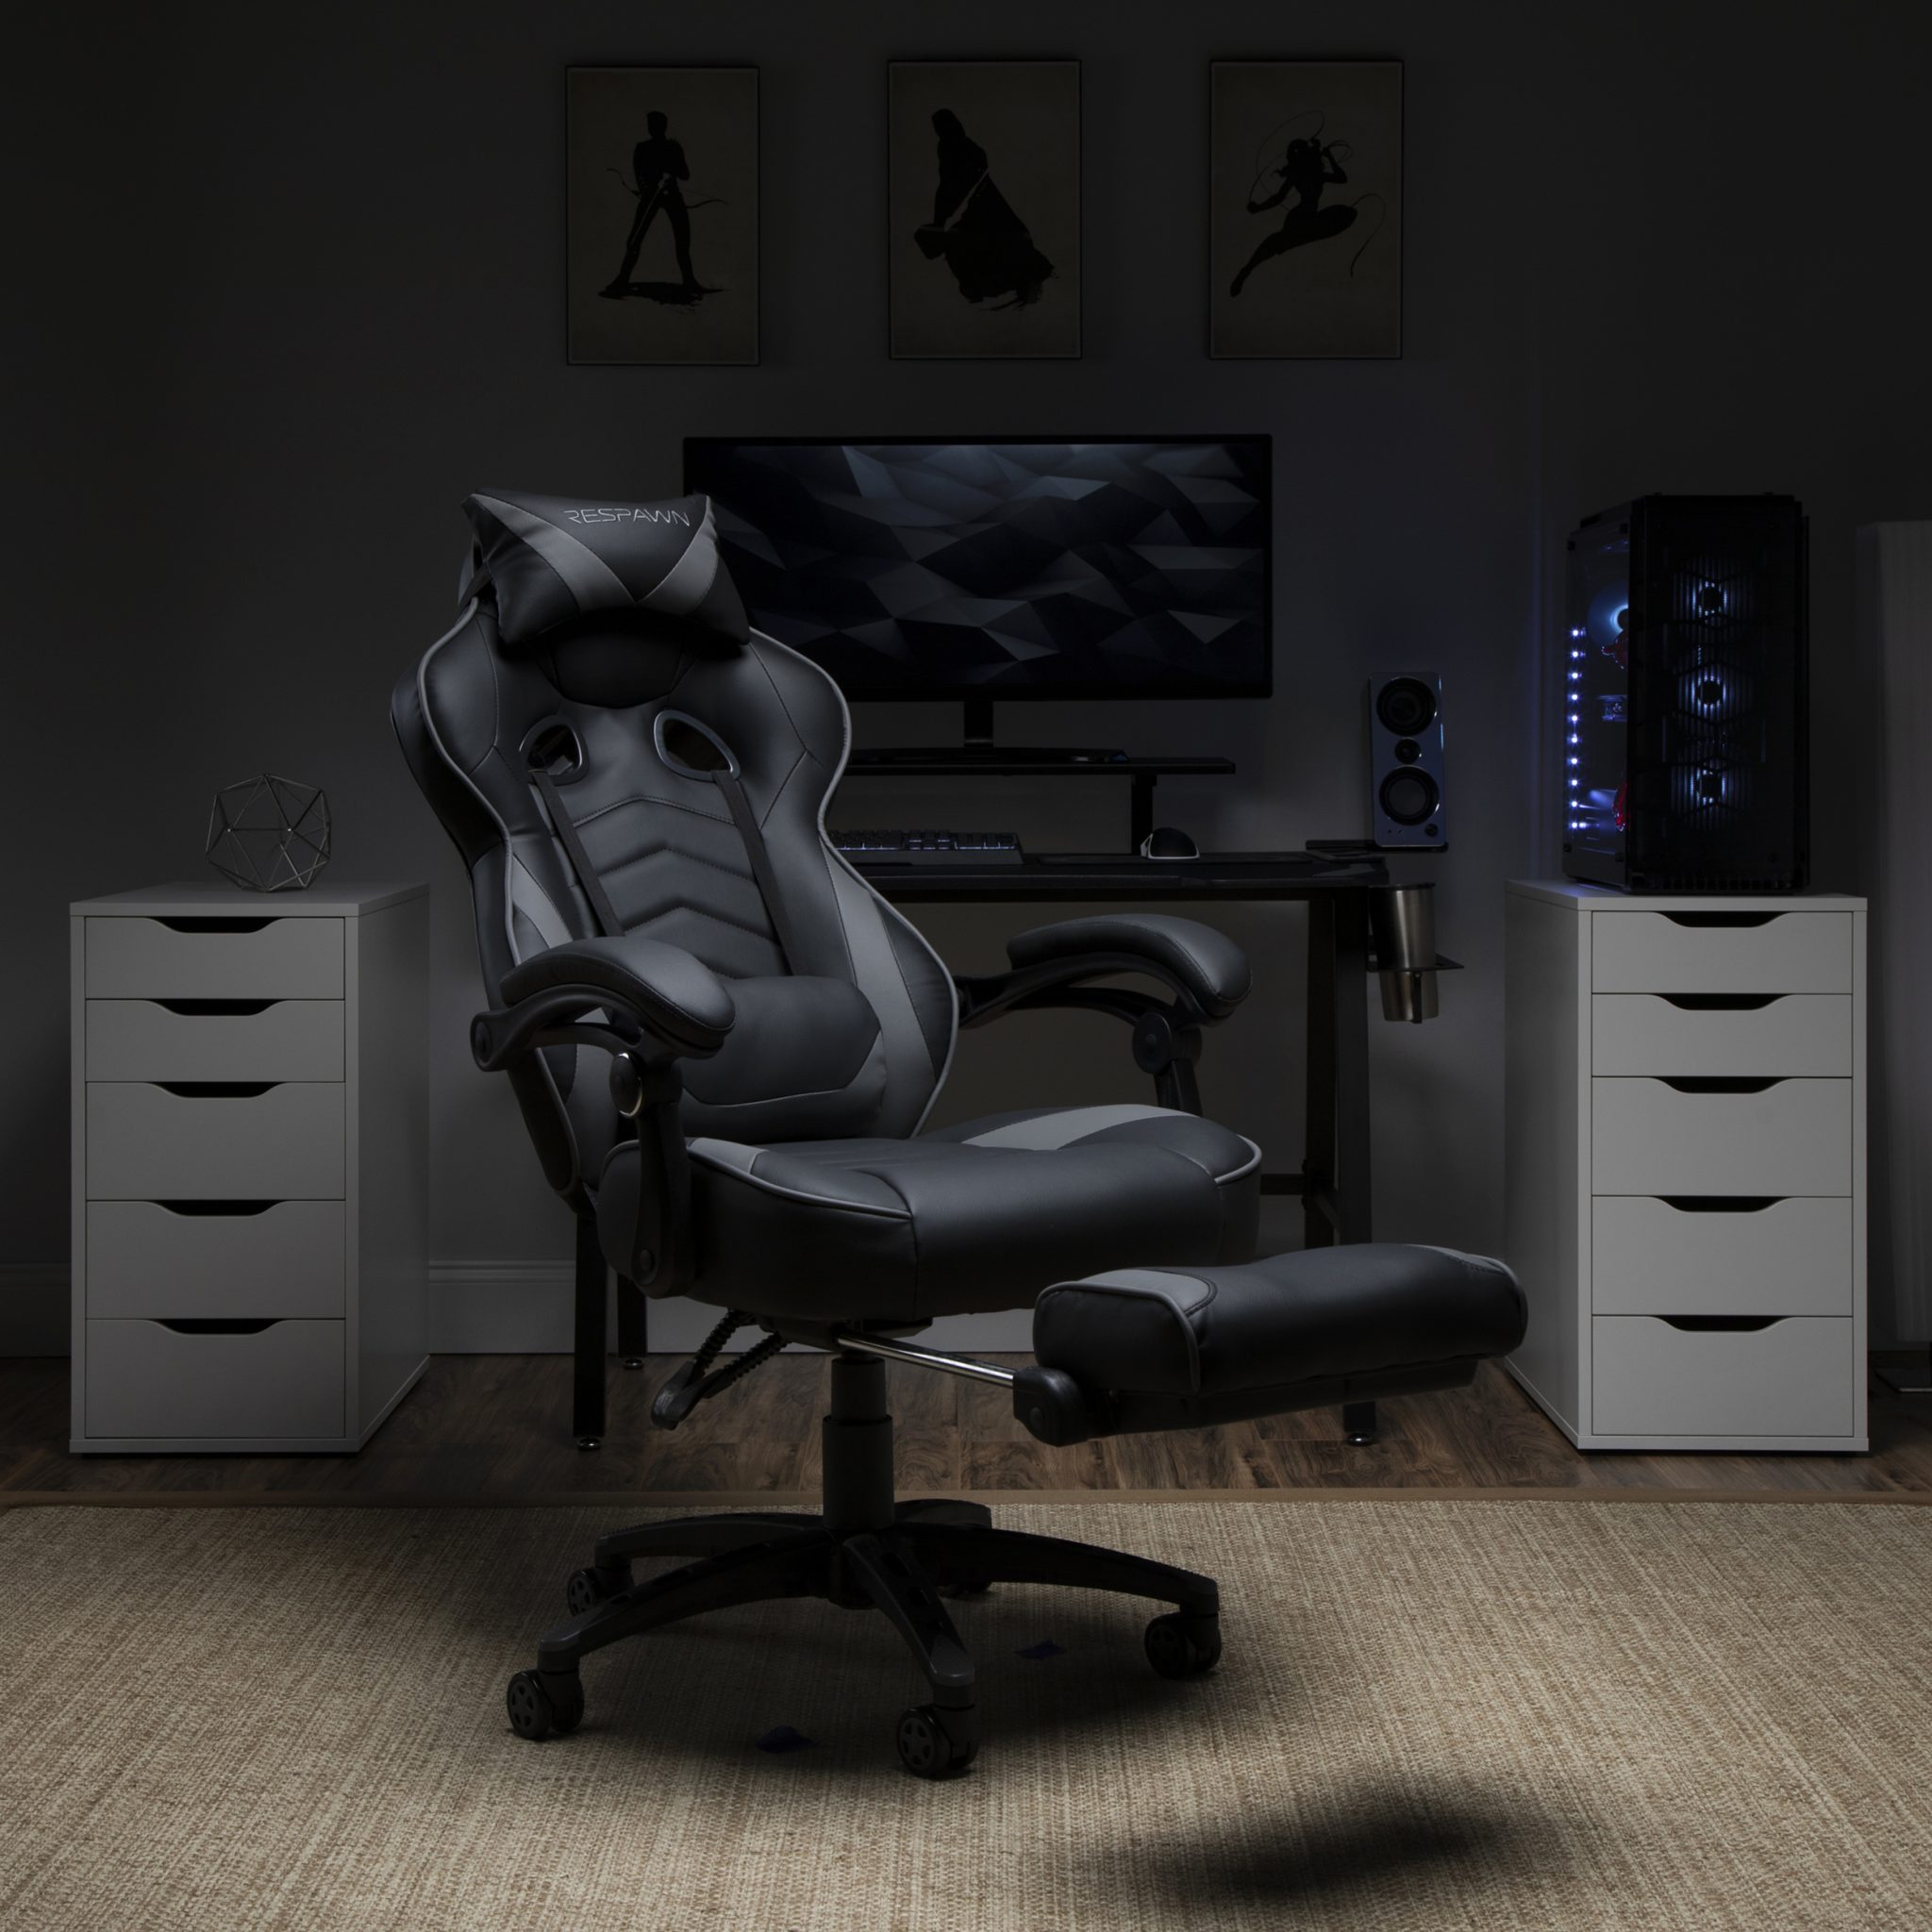 RESPAWN 110 Racing Style Gaming Chair, Reclining Ergonomic